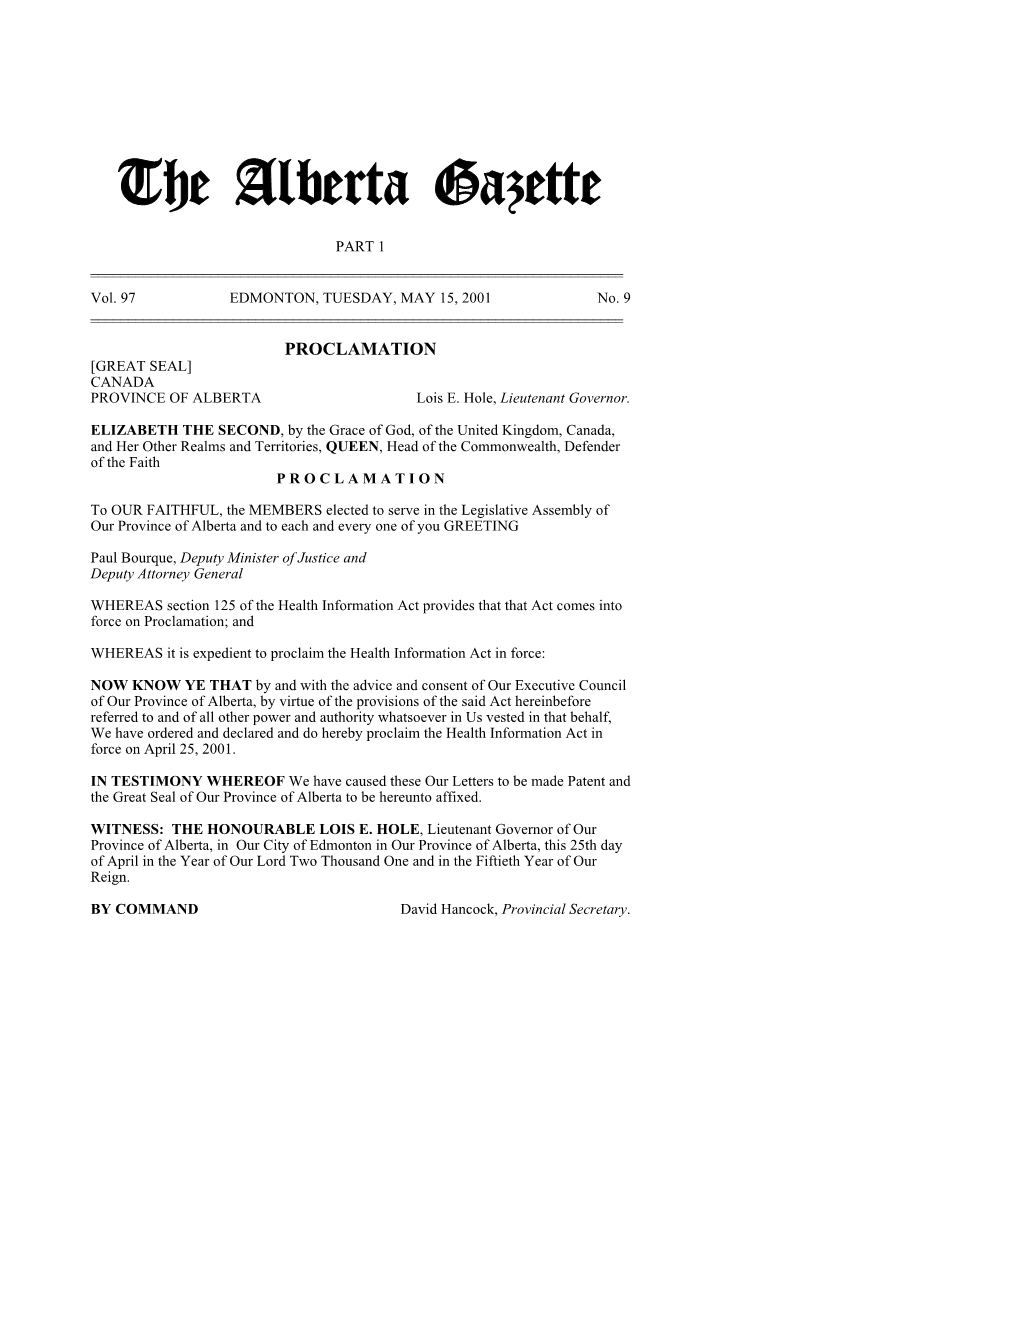 The Alberta Gazette, Part I, May 15, 2001